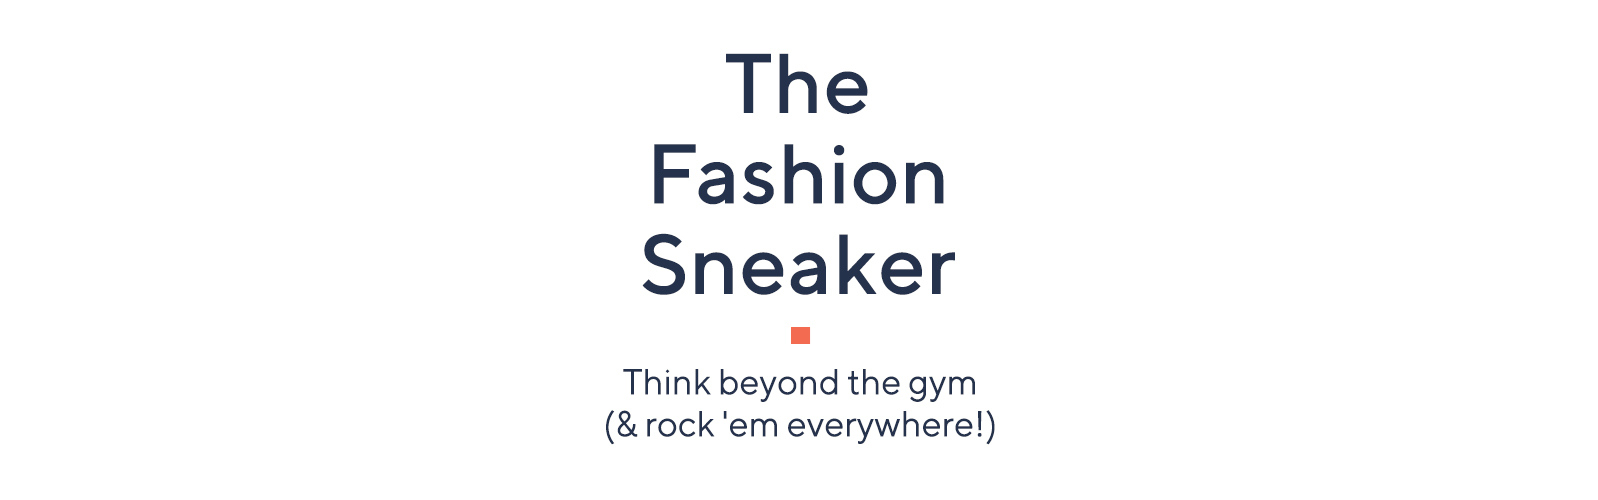 The Fashion Sneaker  Think beyond the gym (& rock 'em everywhere!)